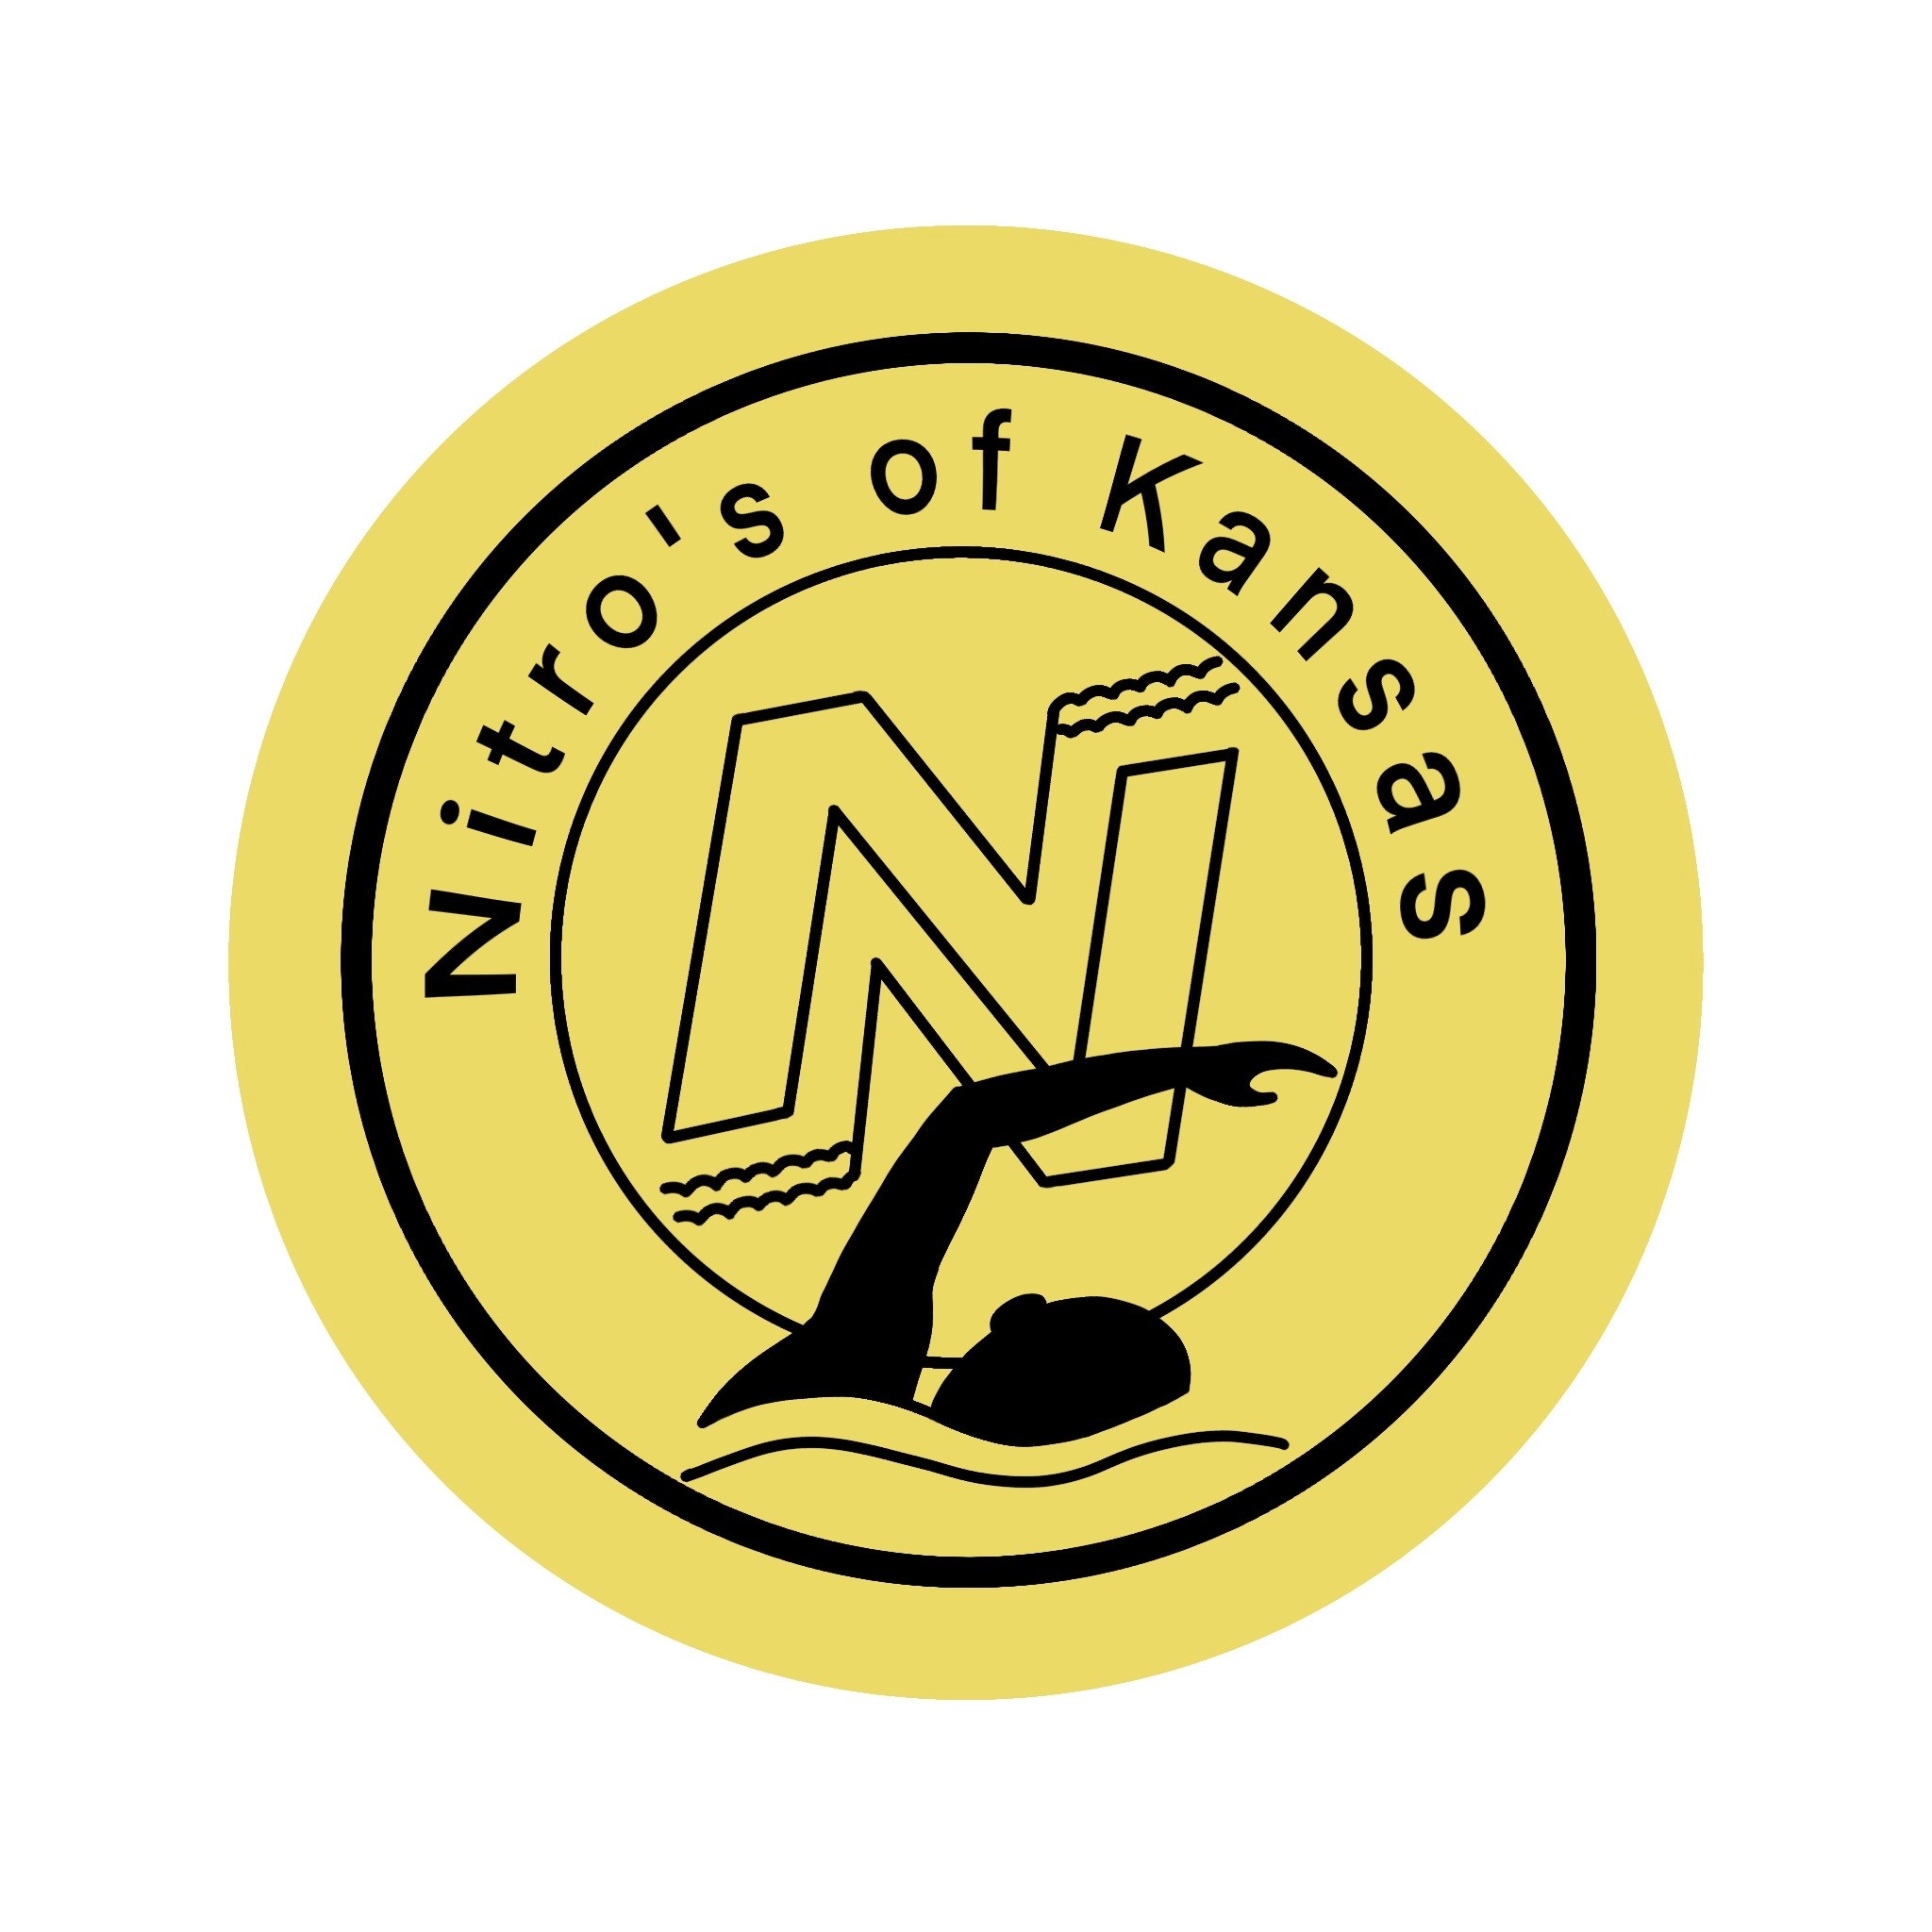 Nitros of Kansas Logos